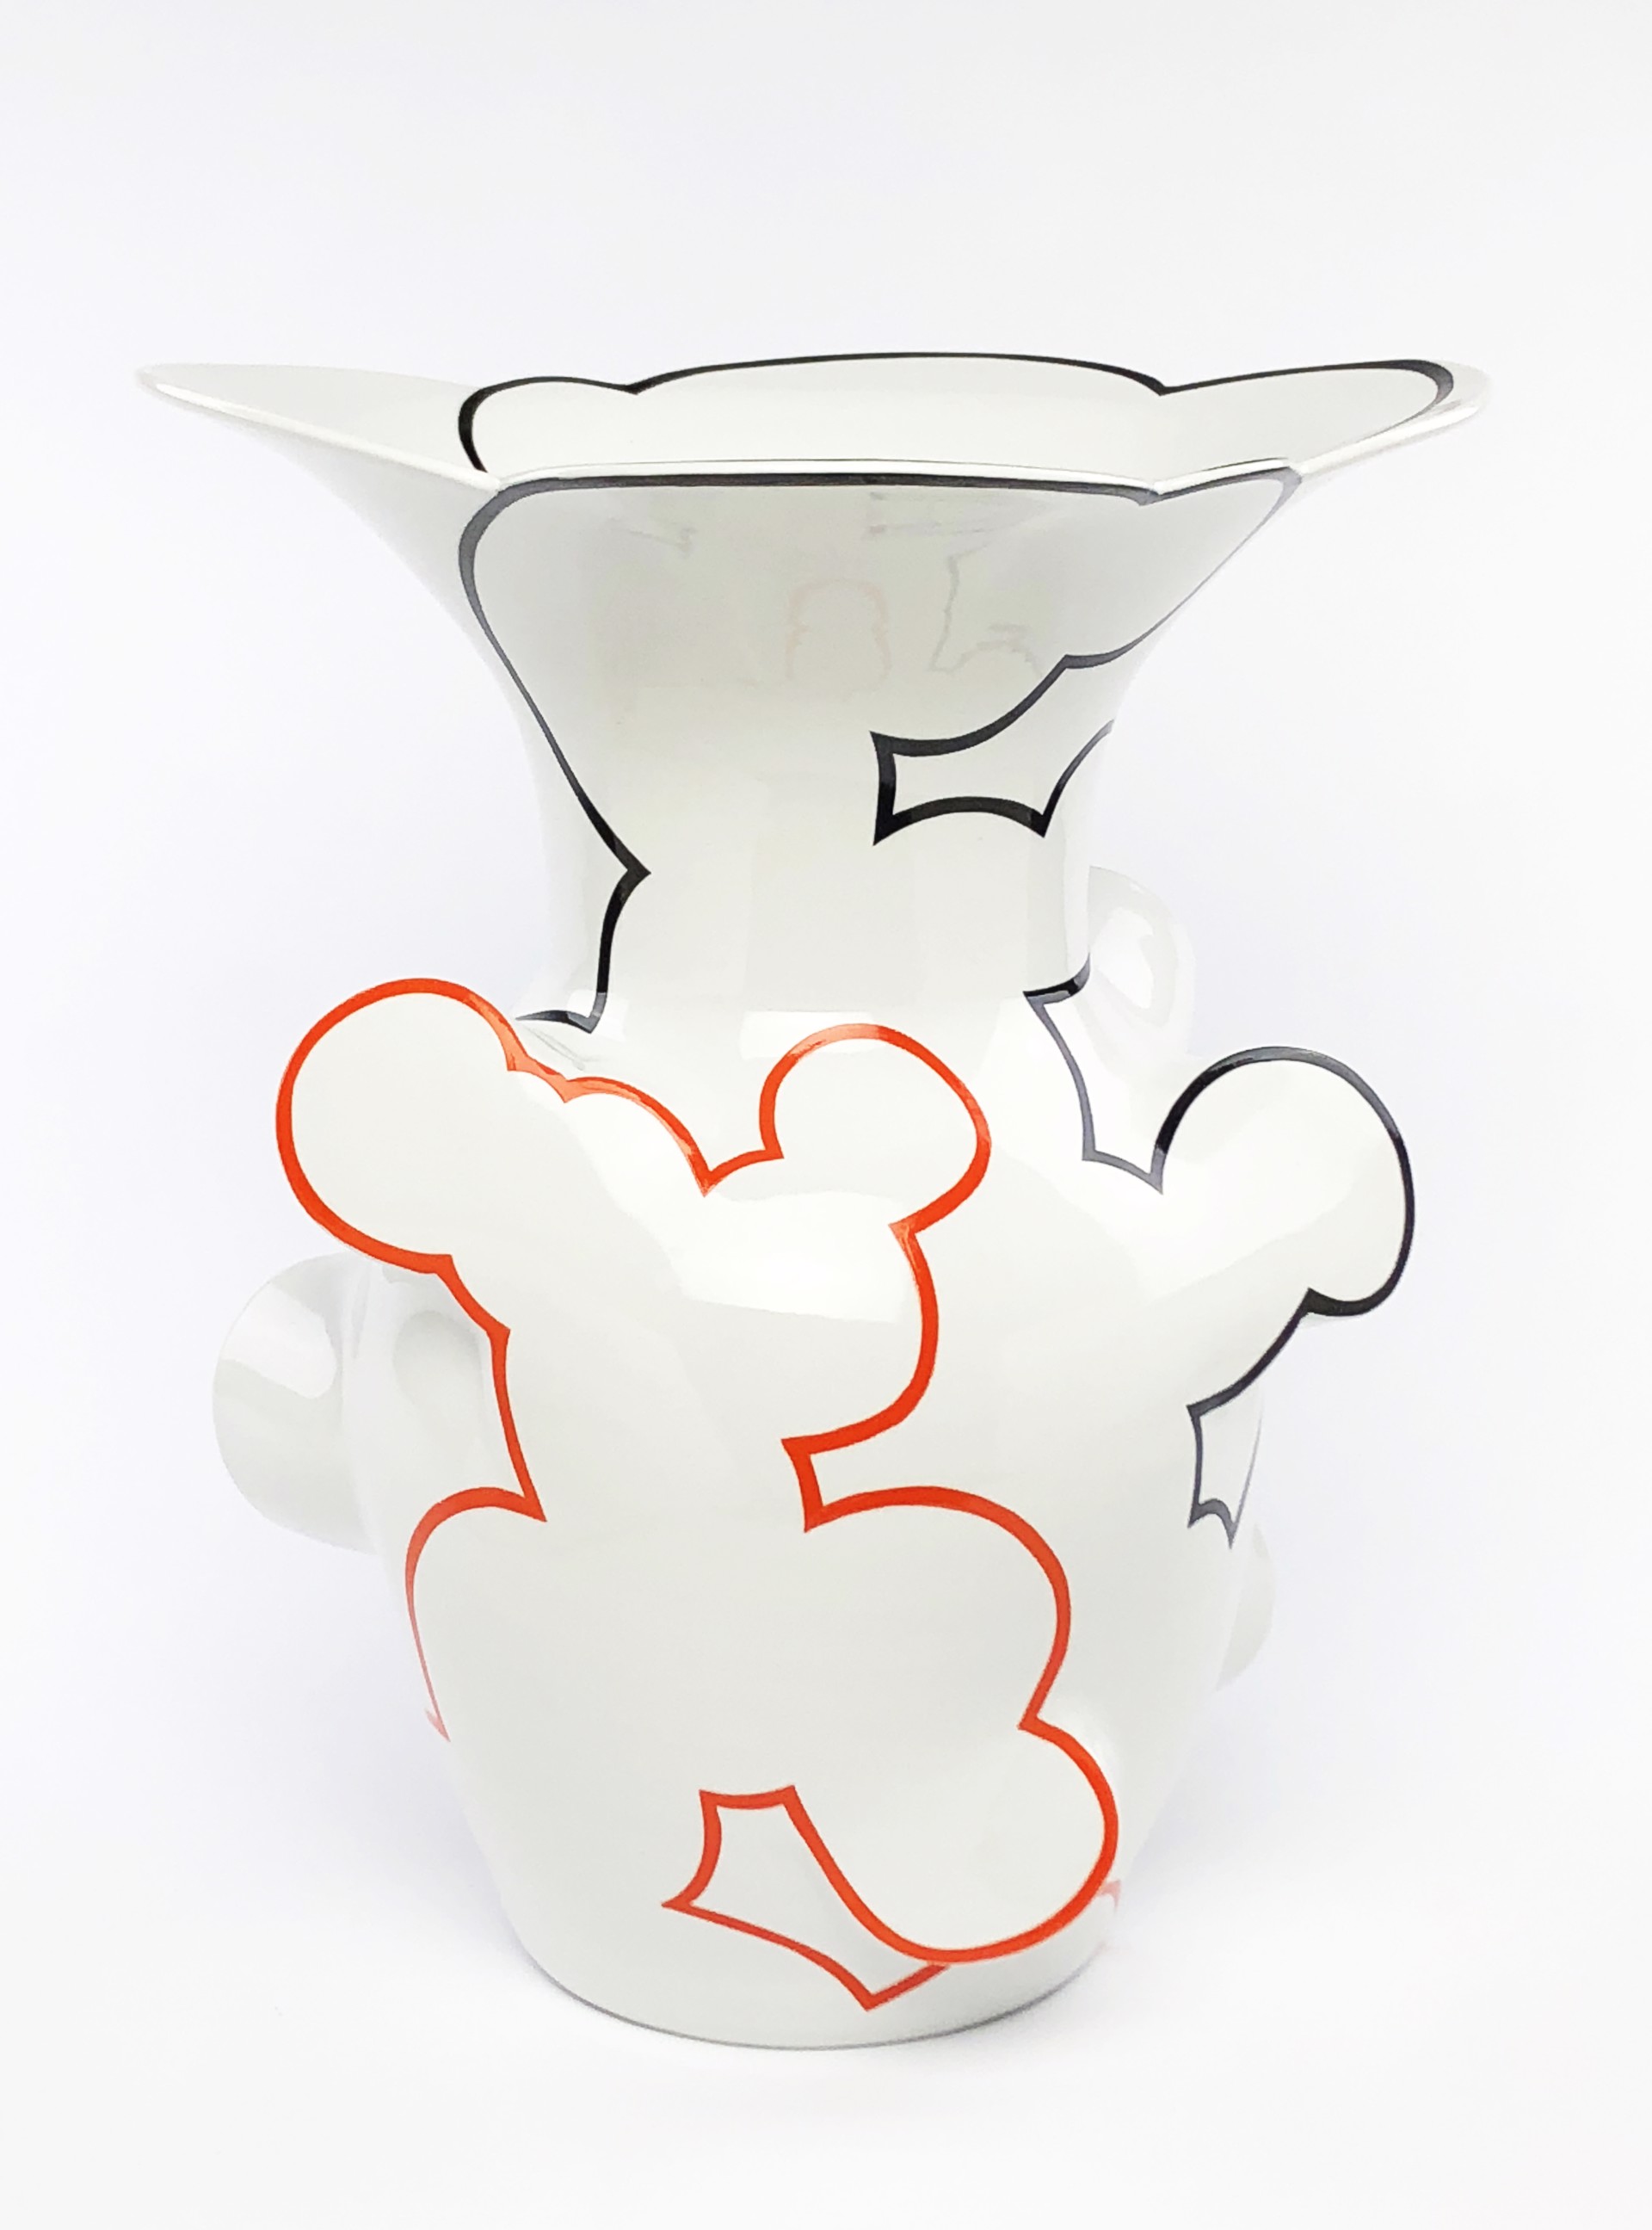 Flared Cloud Vase by Sam Chung